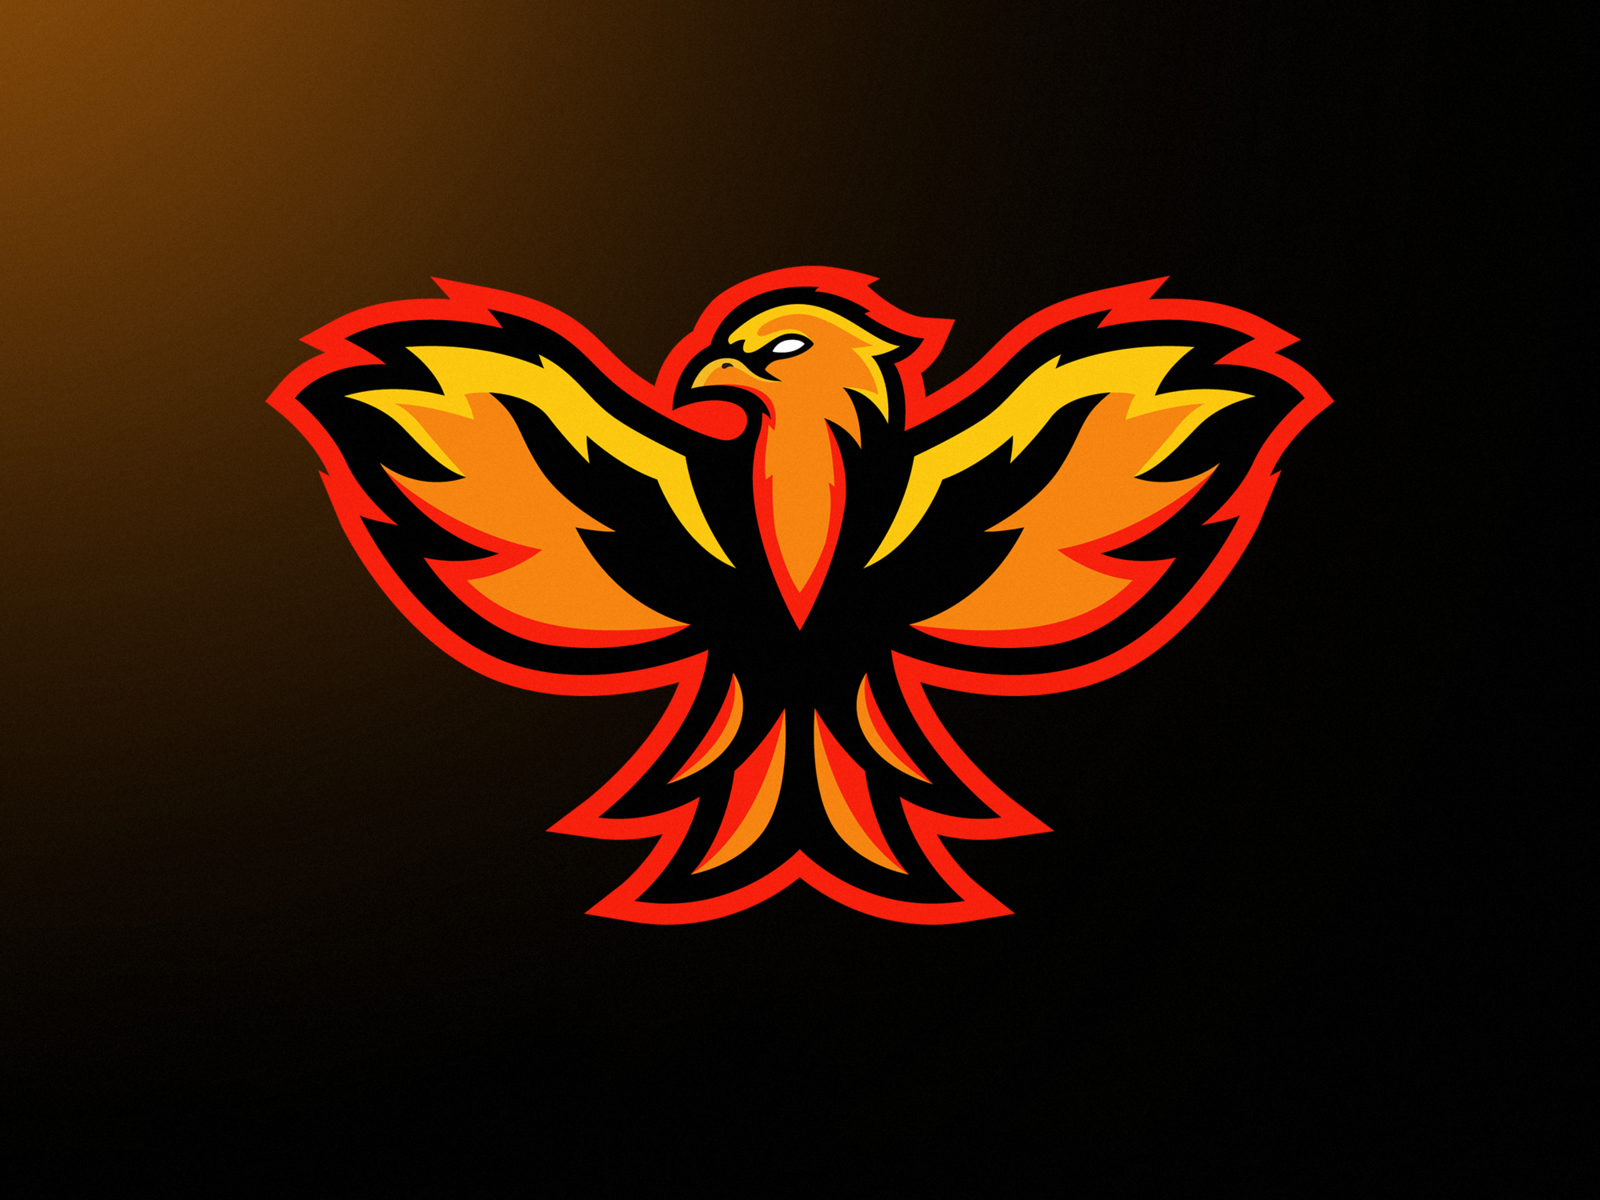 Феникс рп. Птица Феникс. Феникс логотип. Фен6иркс для логотипа команды. Птица Феникс вектор.